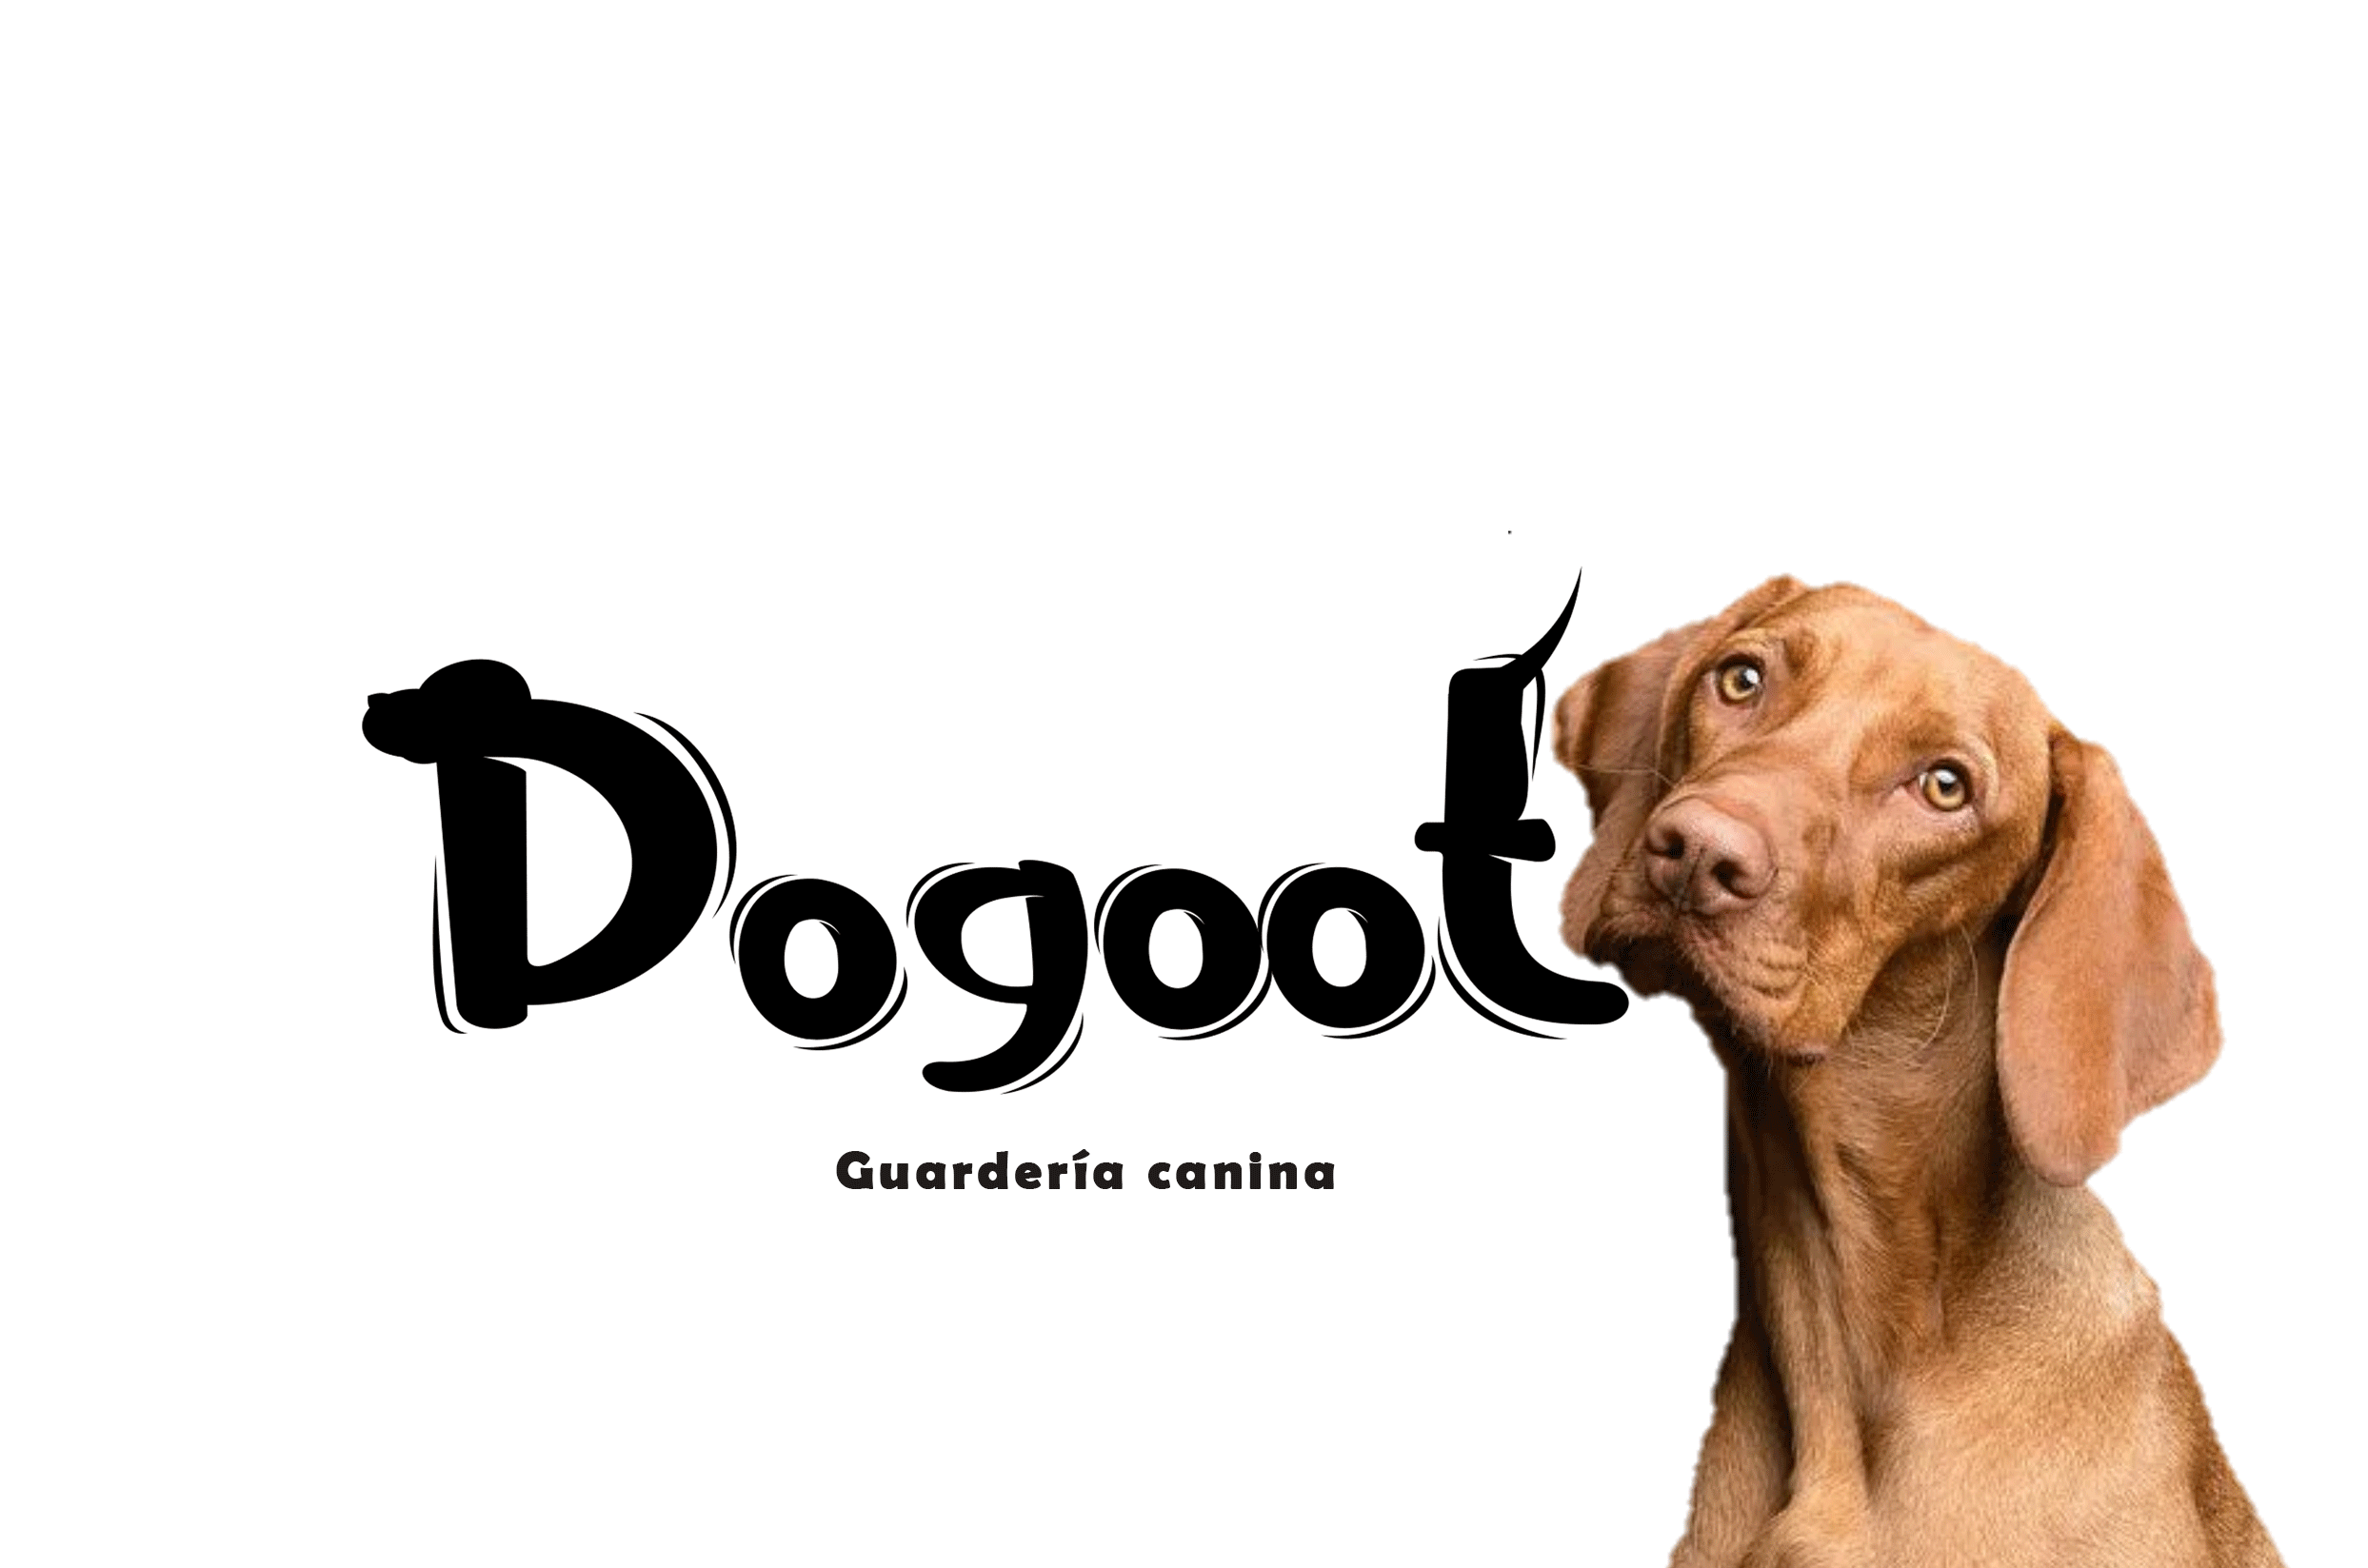 Jogoof

Guarderia canina